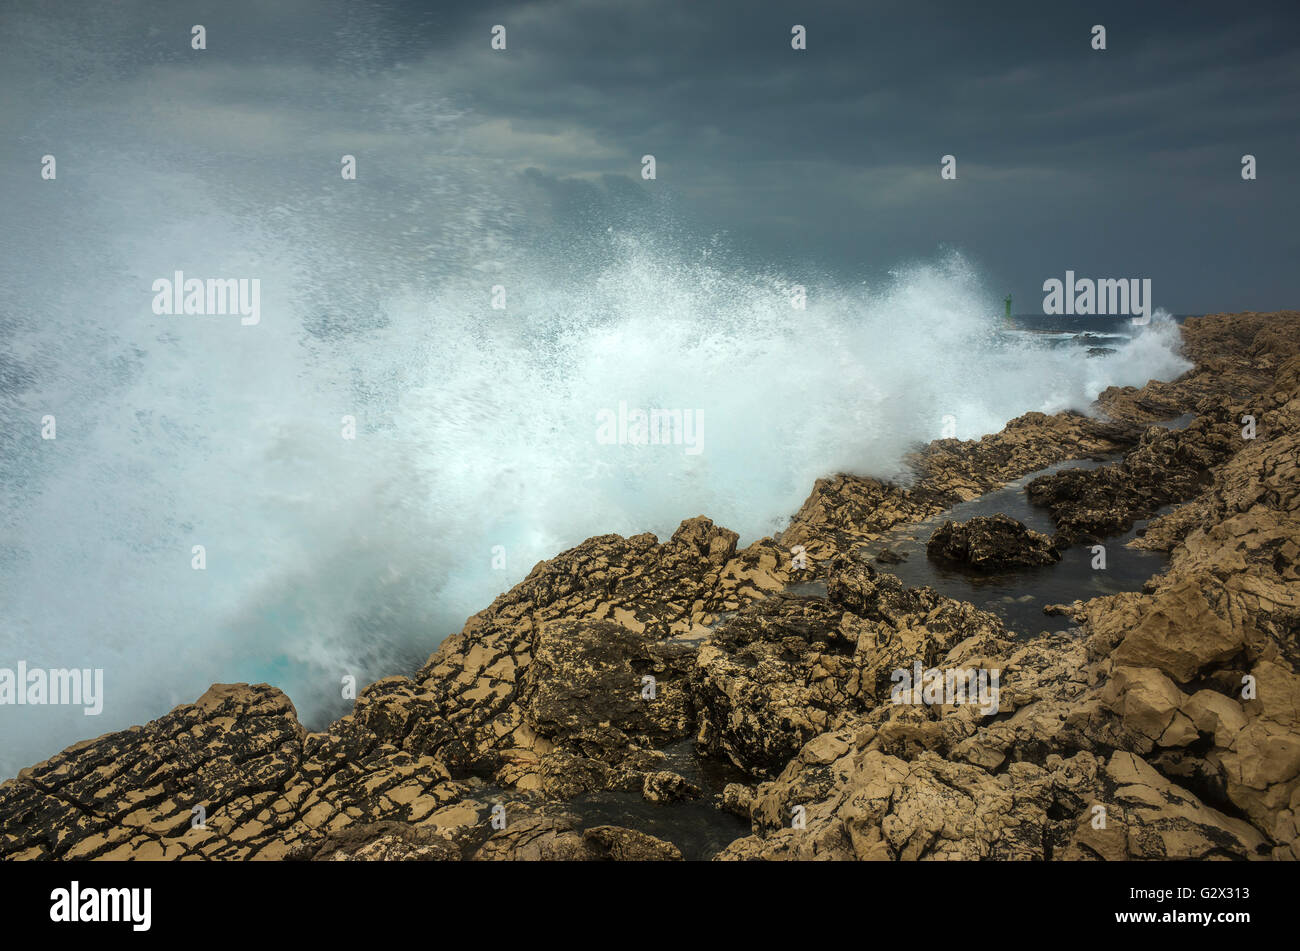 Europe Croatia. Adriatic Sea. Big Waves on Cliffs. Stock Photo